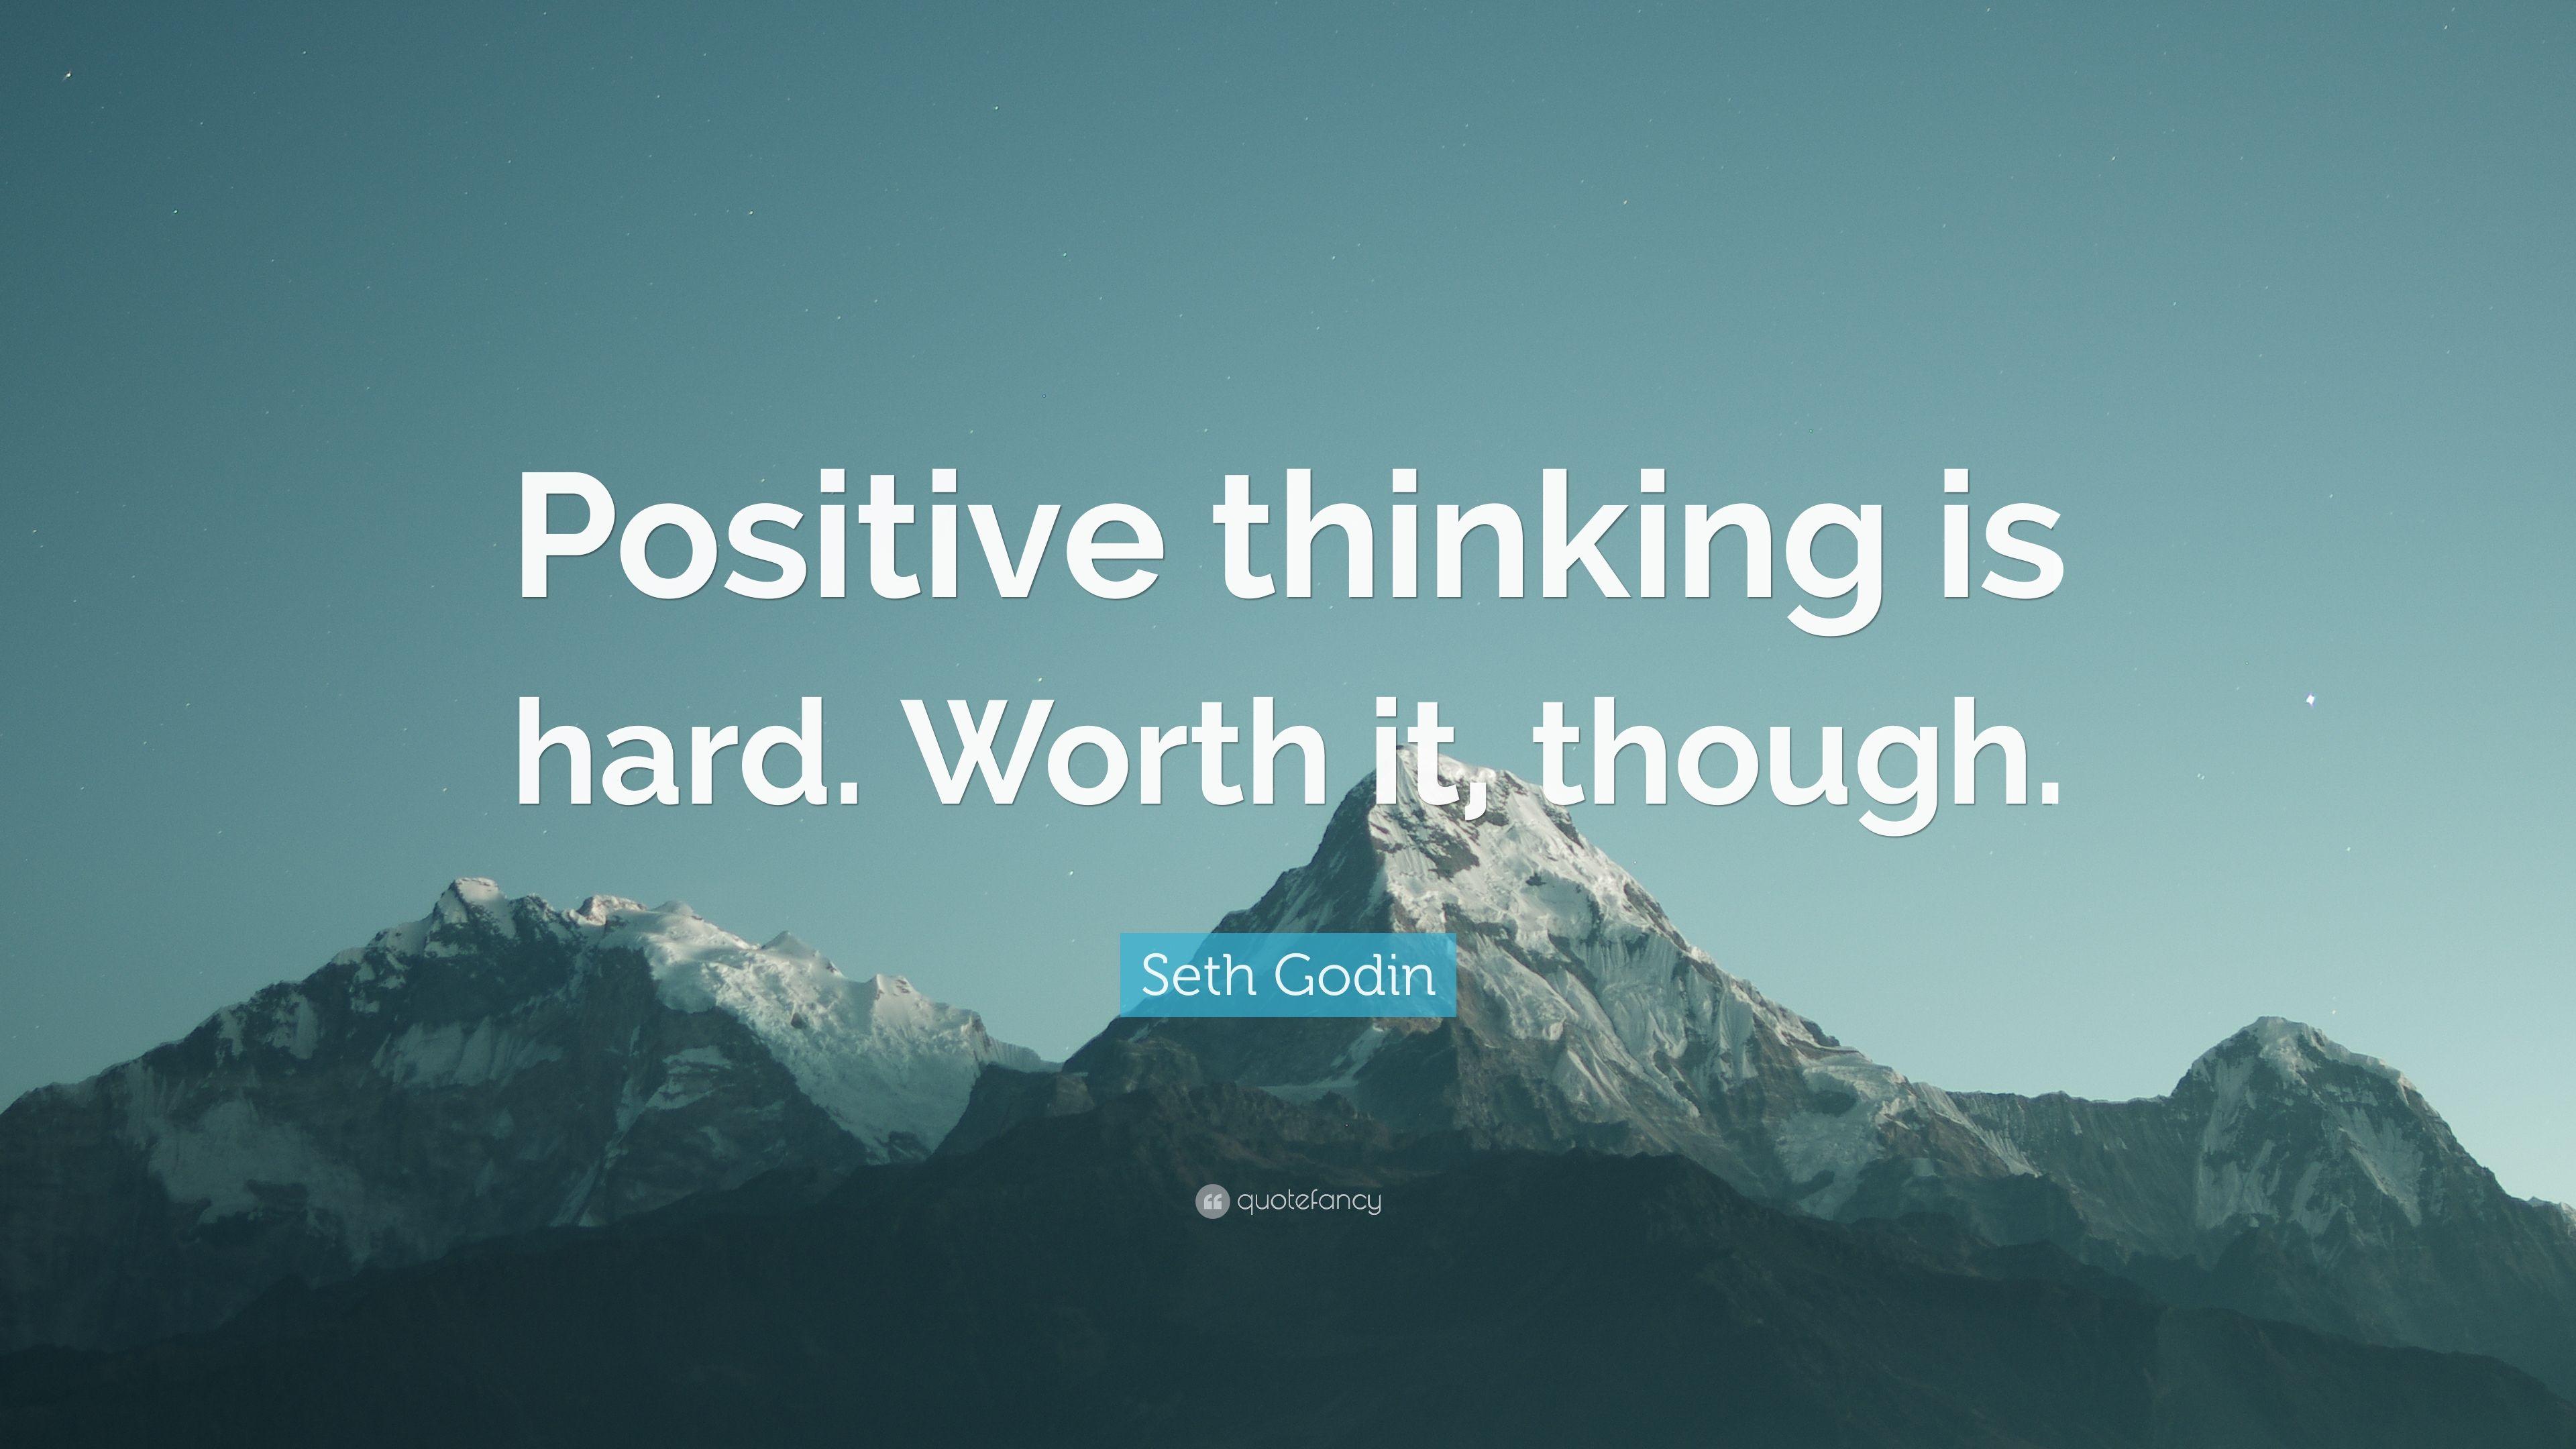 Seth Godin Quote: “Positive thinking is hard. Worth it